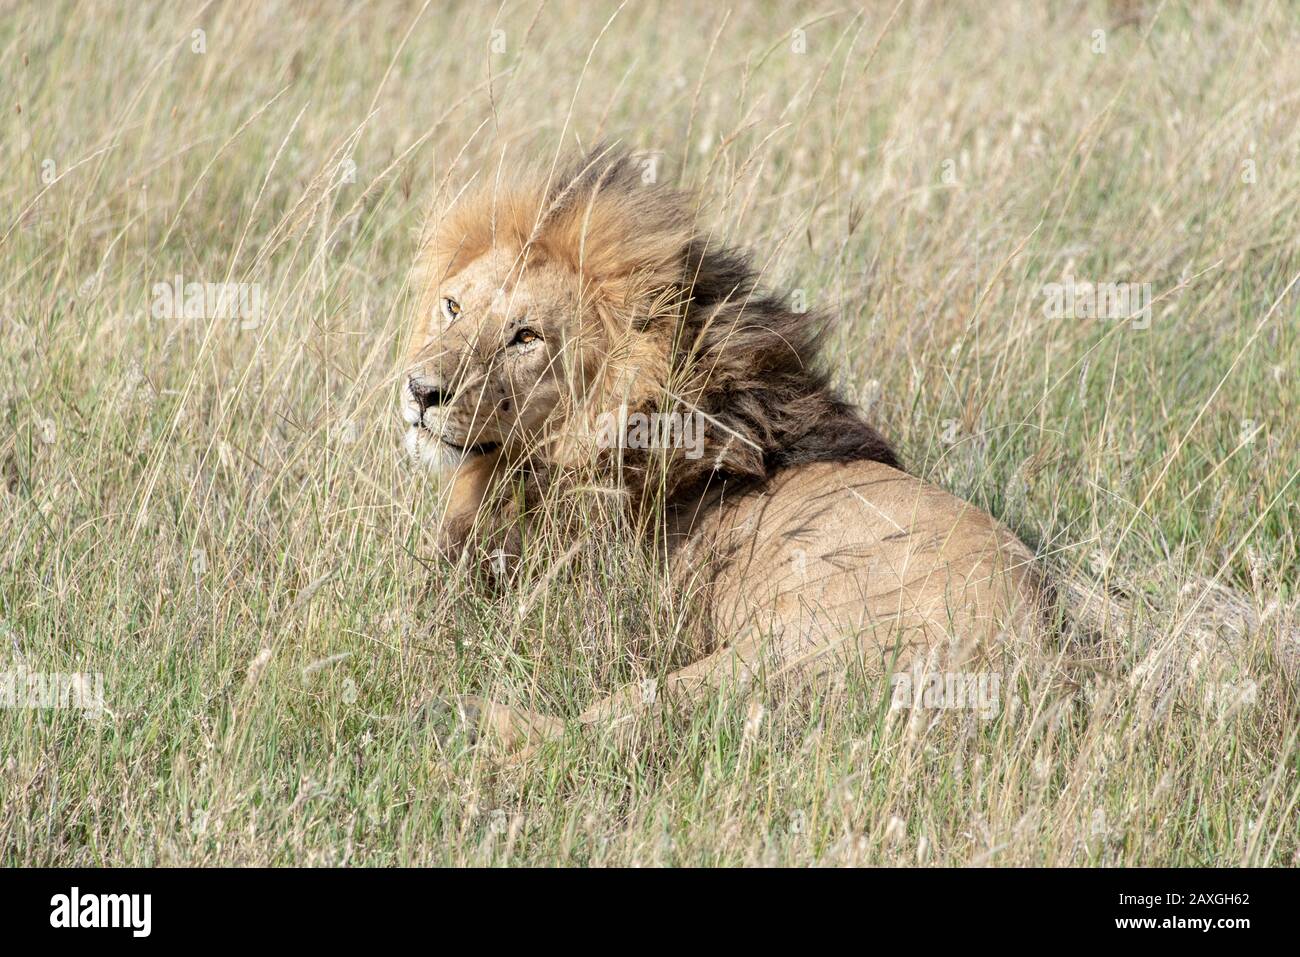 Handsome male Lion in the Serengeti grasslands Stock Photo